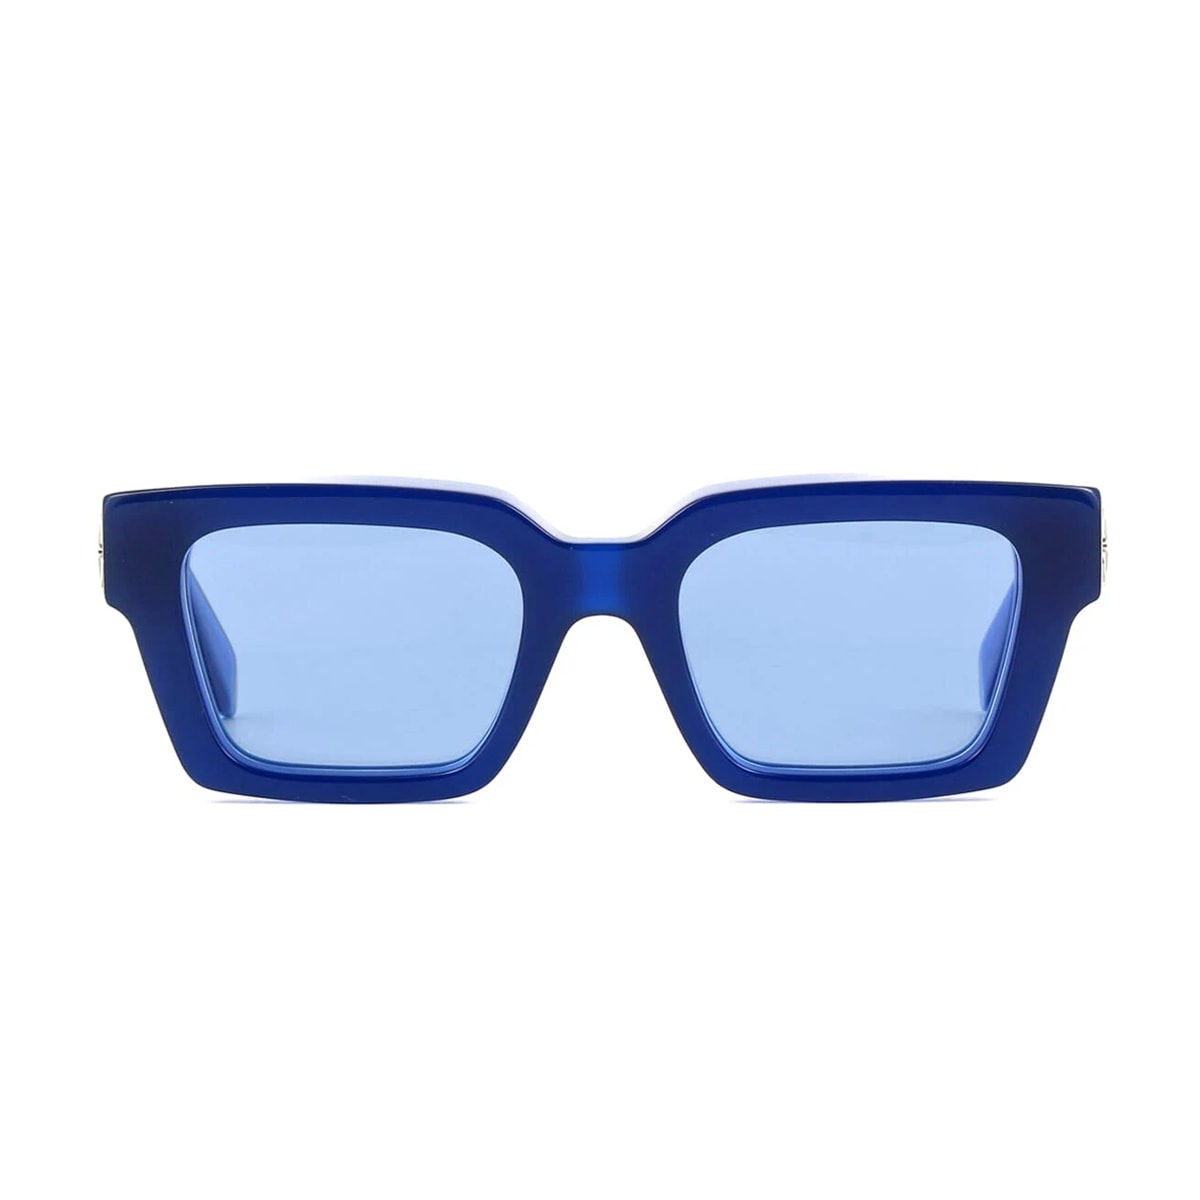 Oeri126 Virgil 4540 Blue Sunglasses